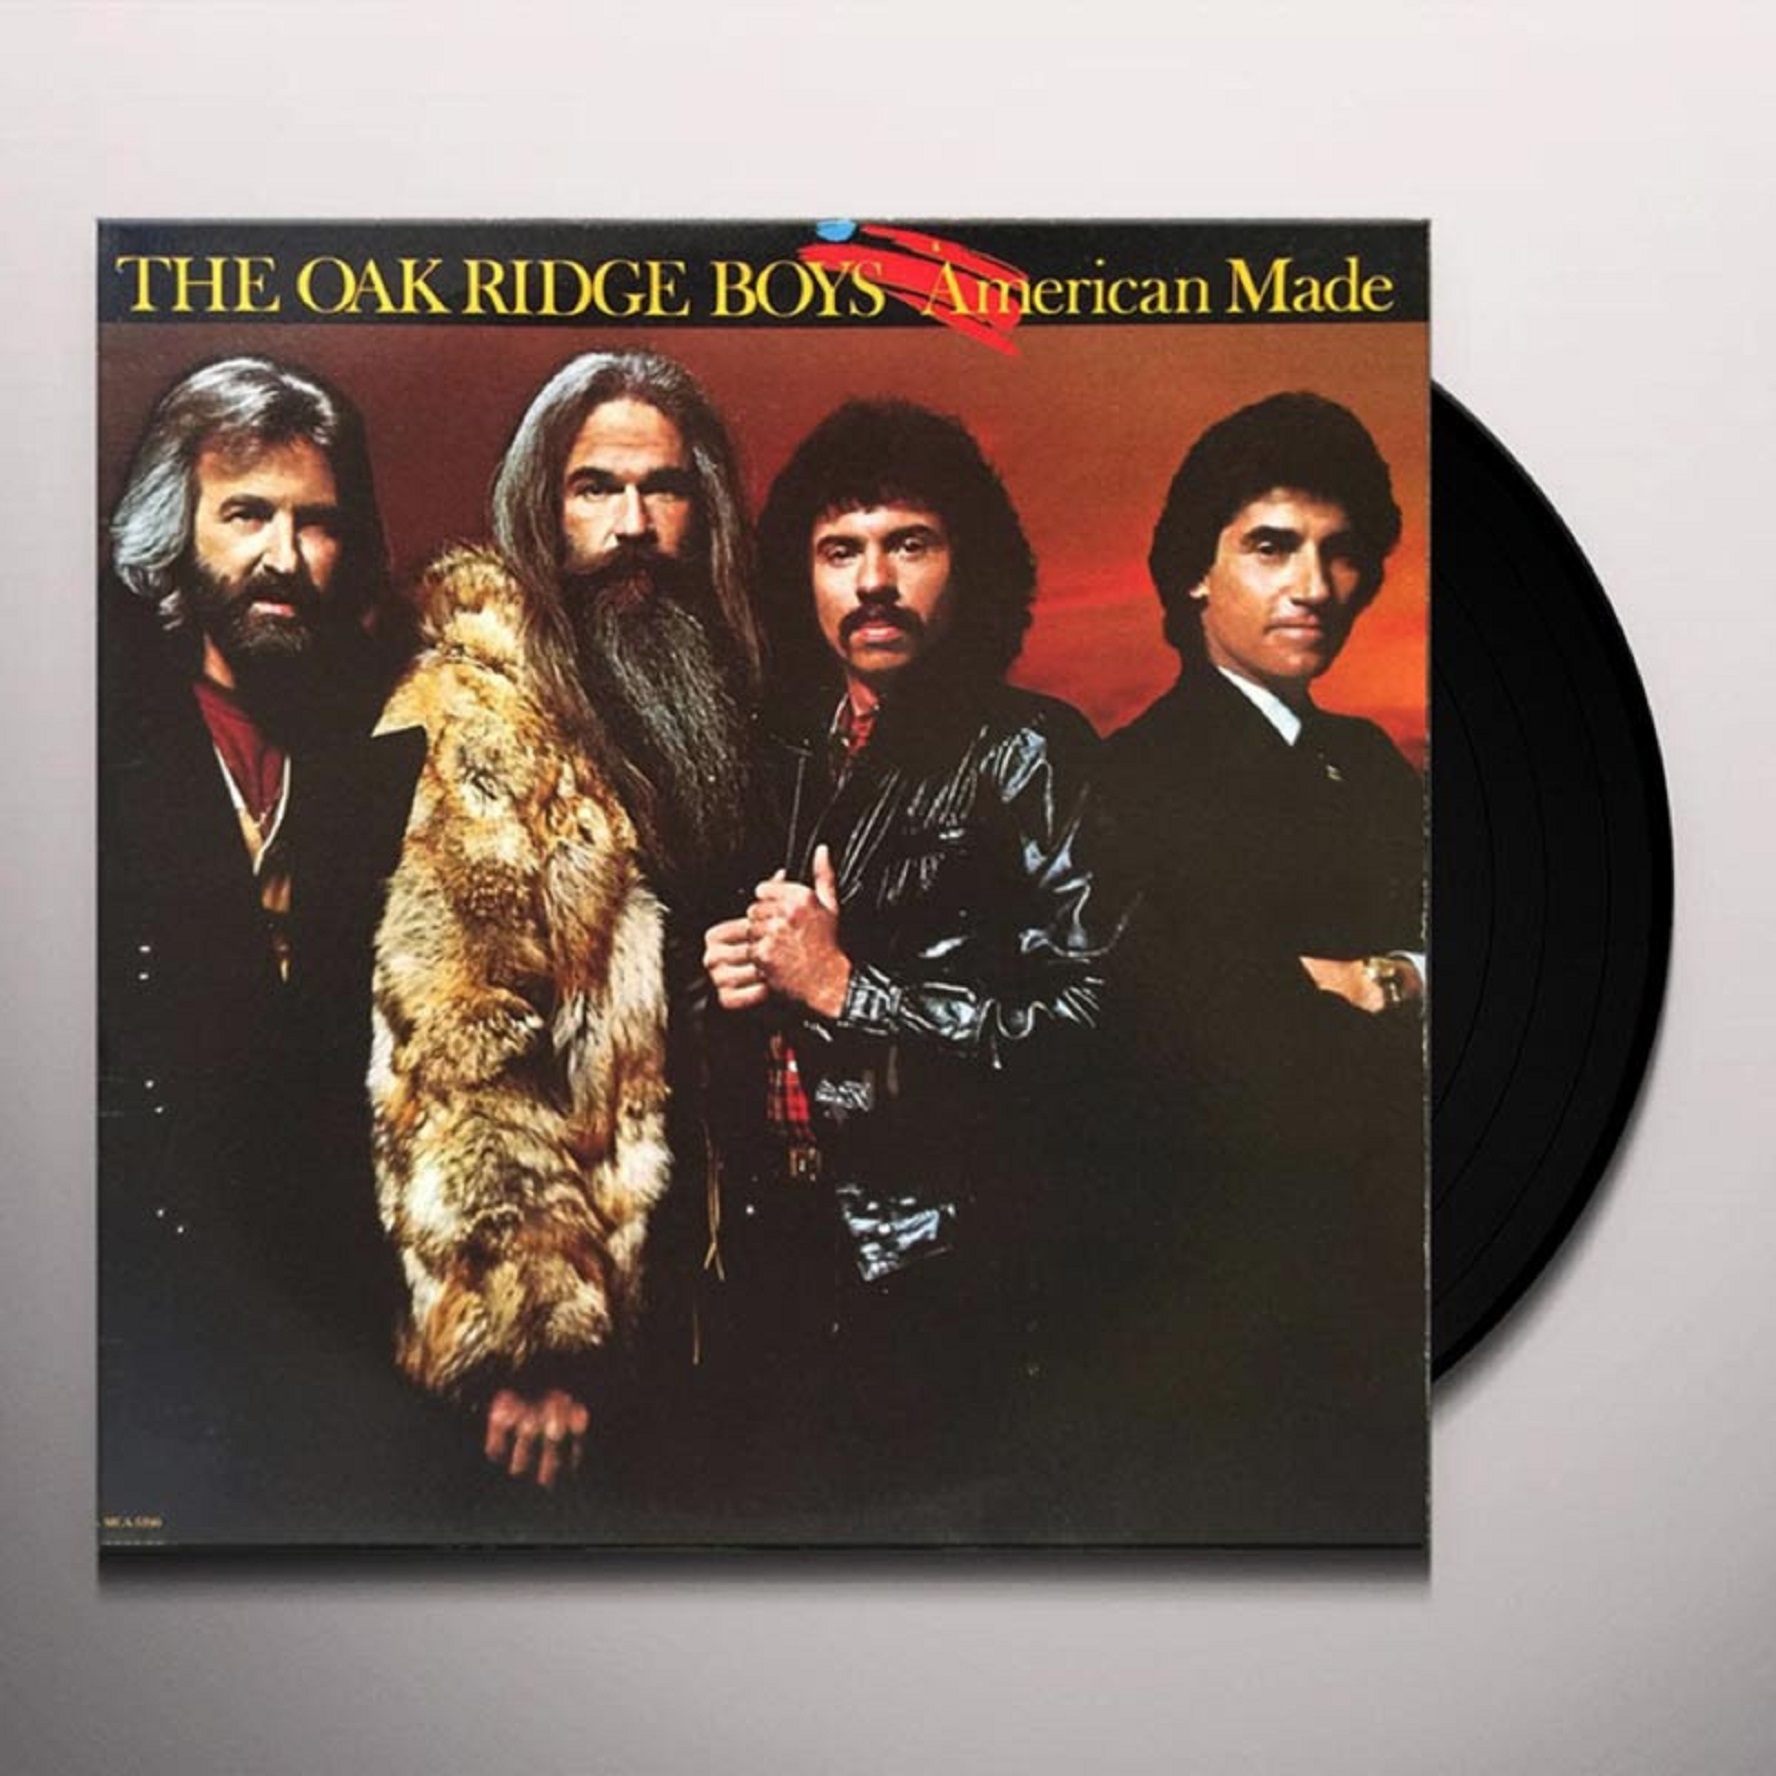 The Oak Ridge Boys Celebrate The 40th Anniversary Of #1 Hit "American Made"